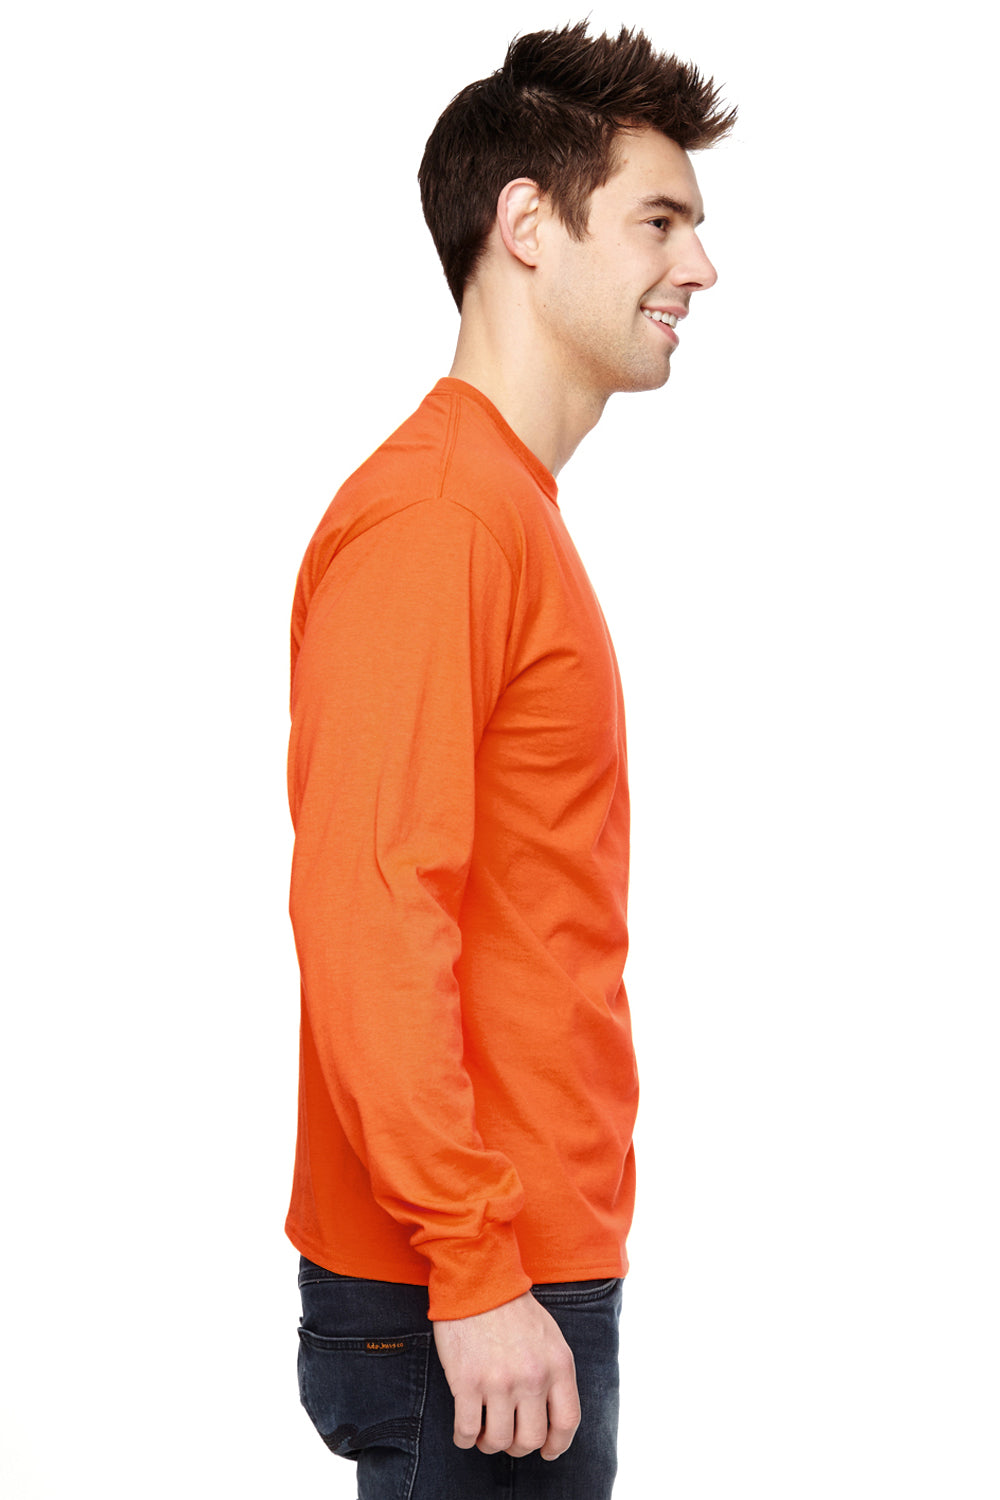 Fruit Of The Loom 4930 Mens HD Jersey Long Sleeve Crewneck T-Shirt Safety Orange Side